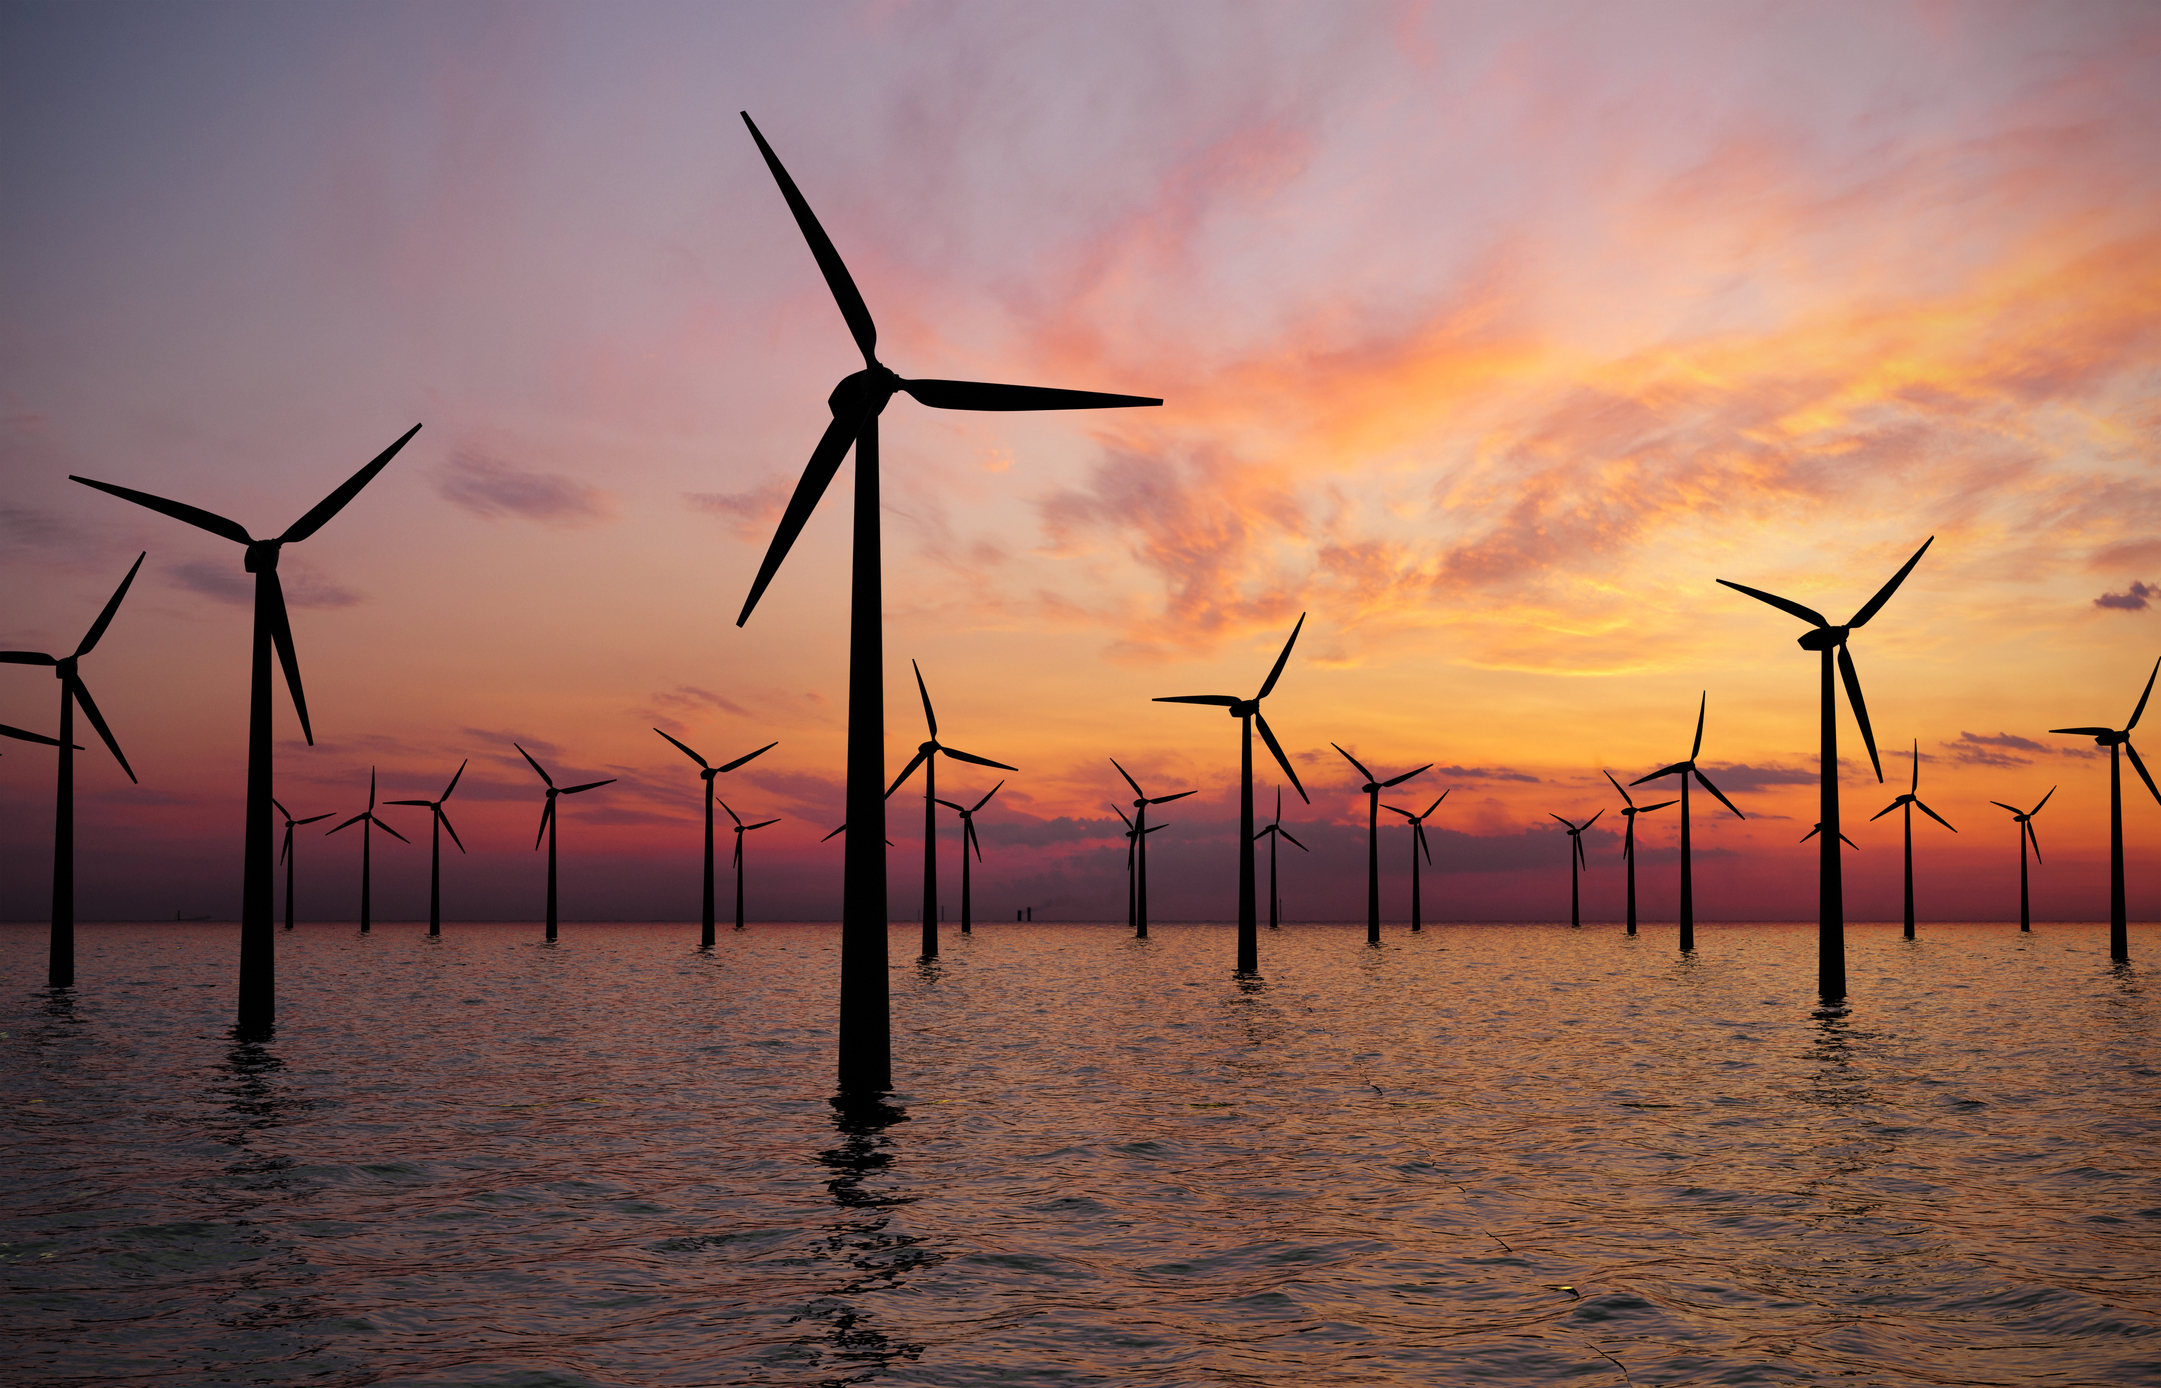 Offshore wind turbines in sunset, illustrative image